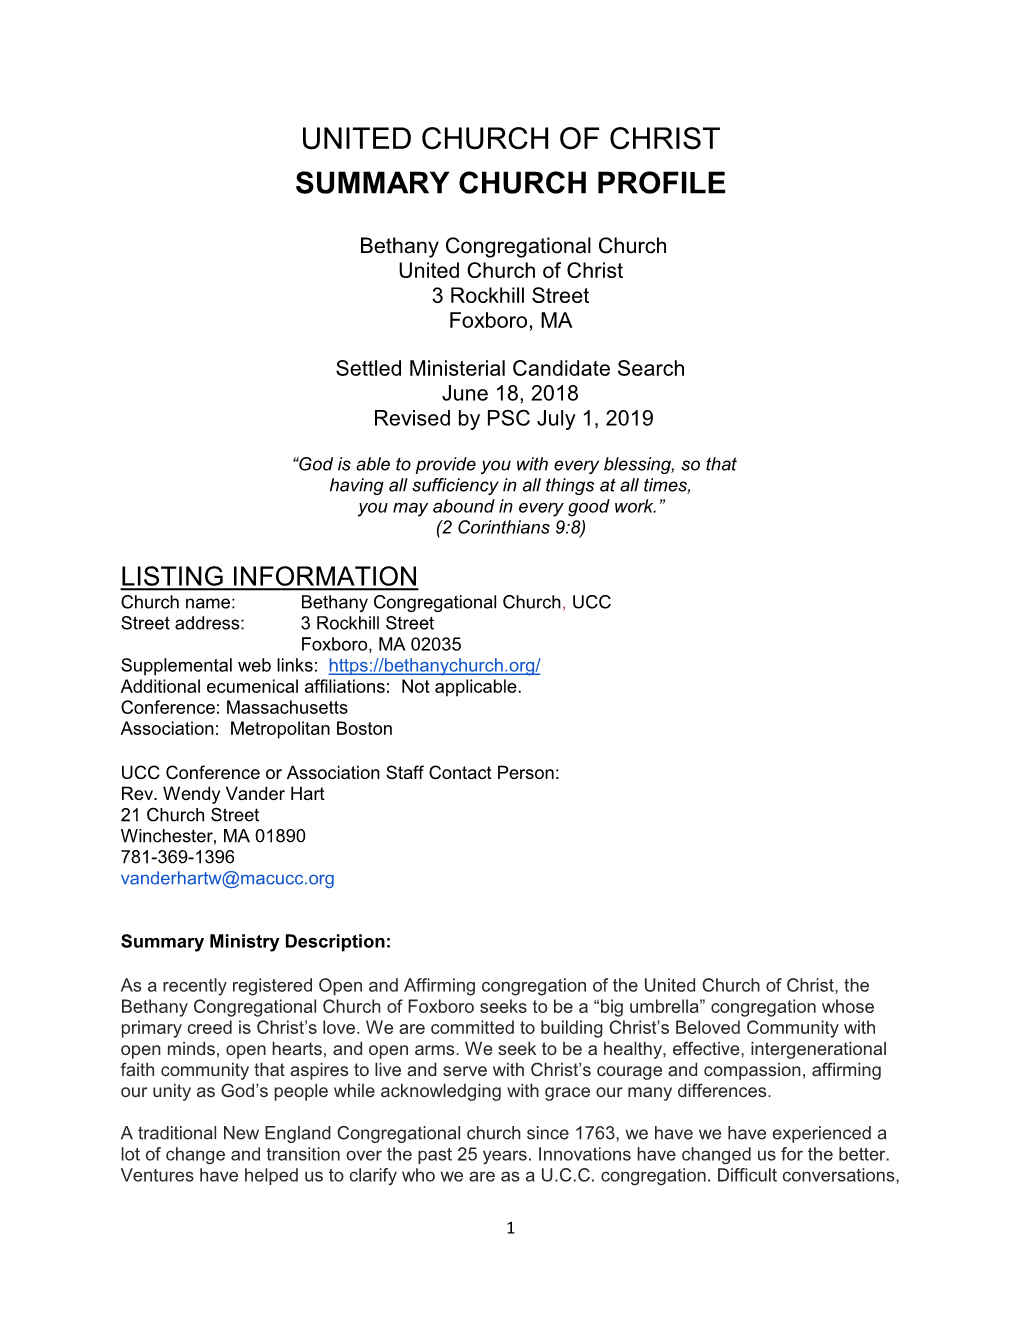 United Church of Christ Summary Church Profile